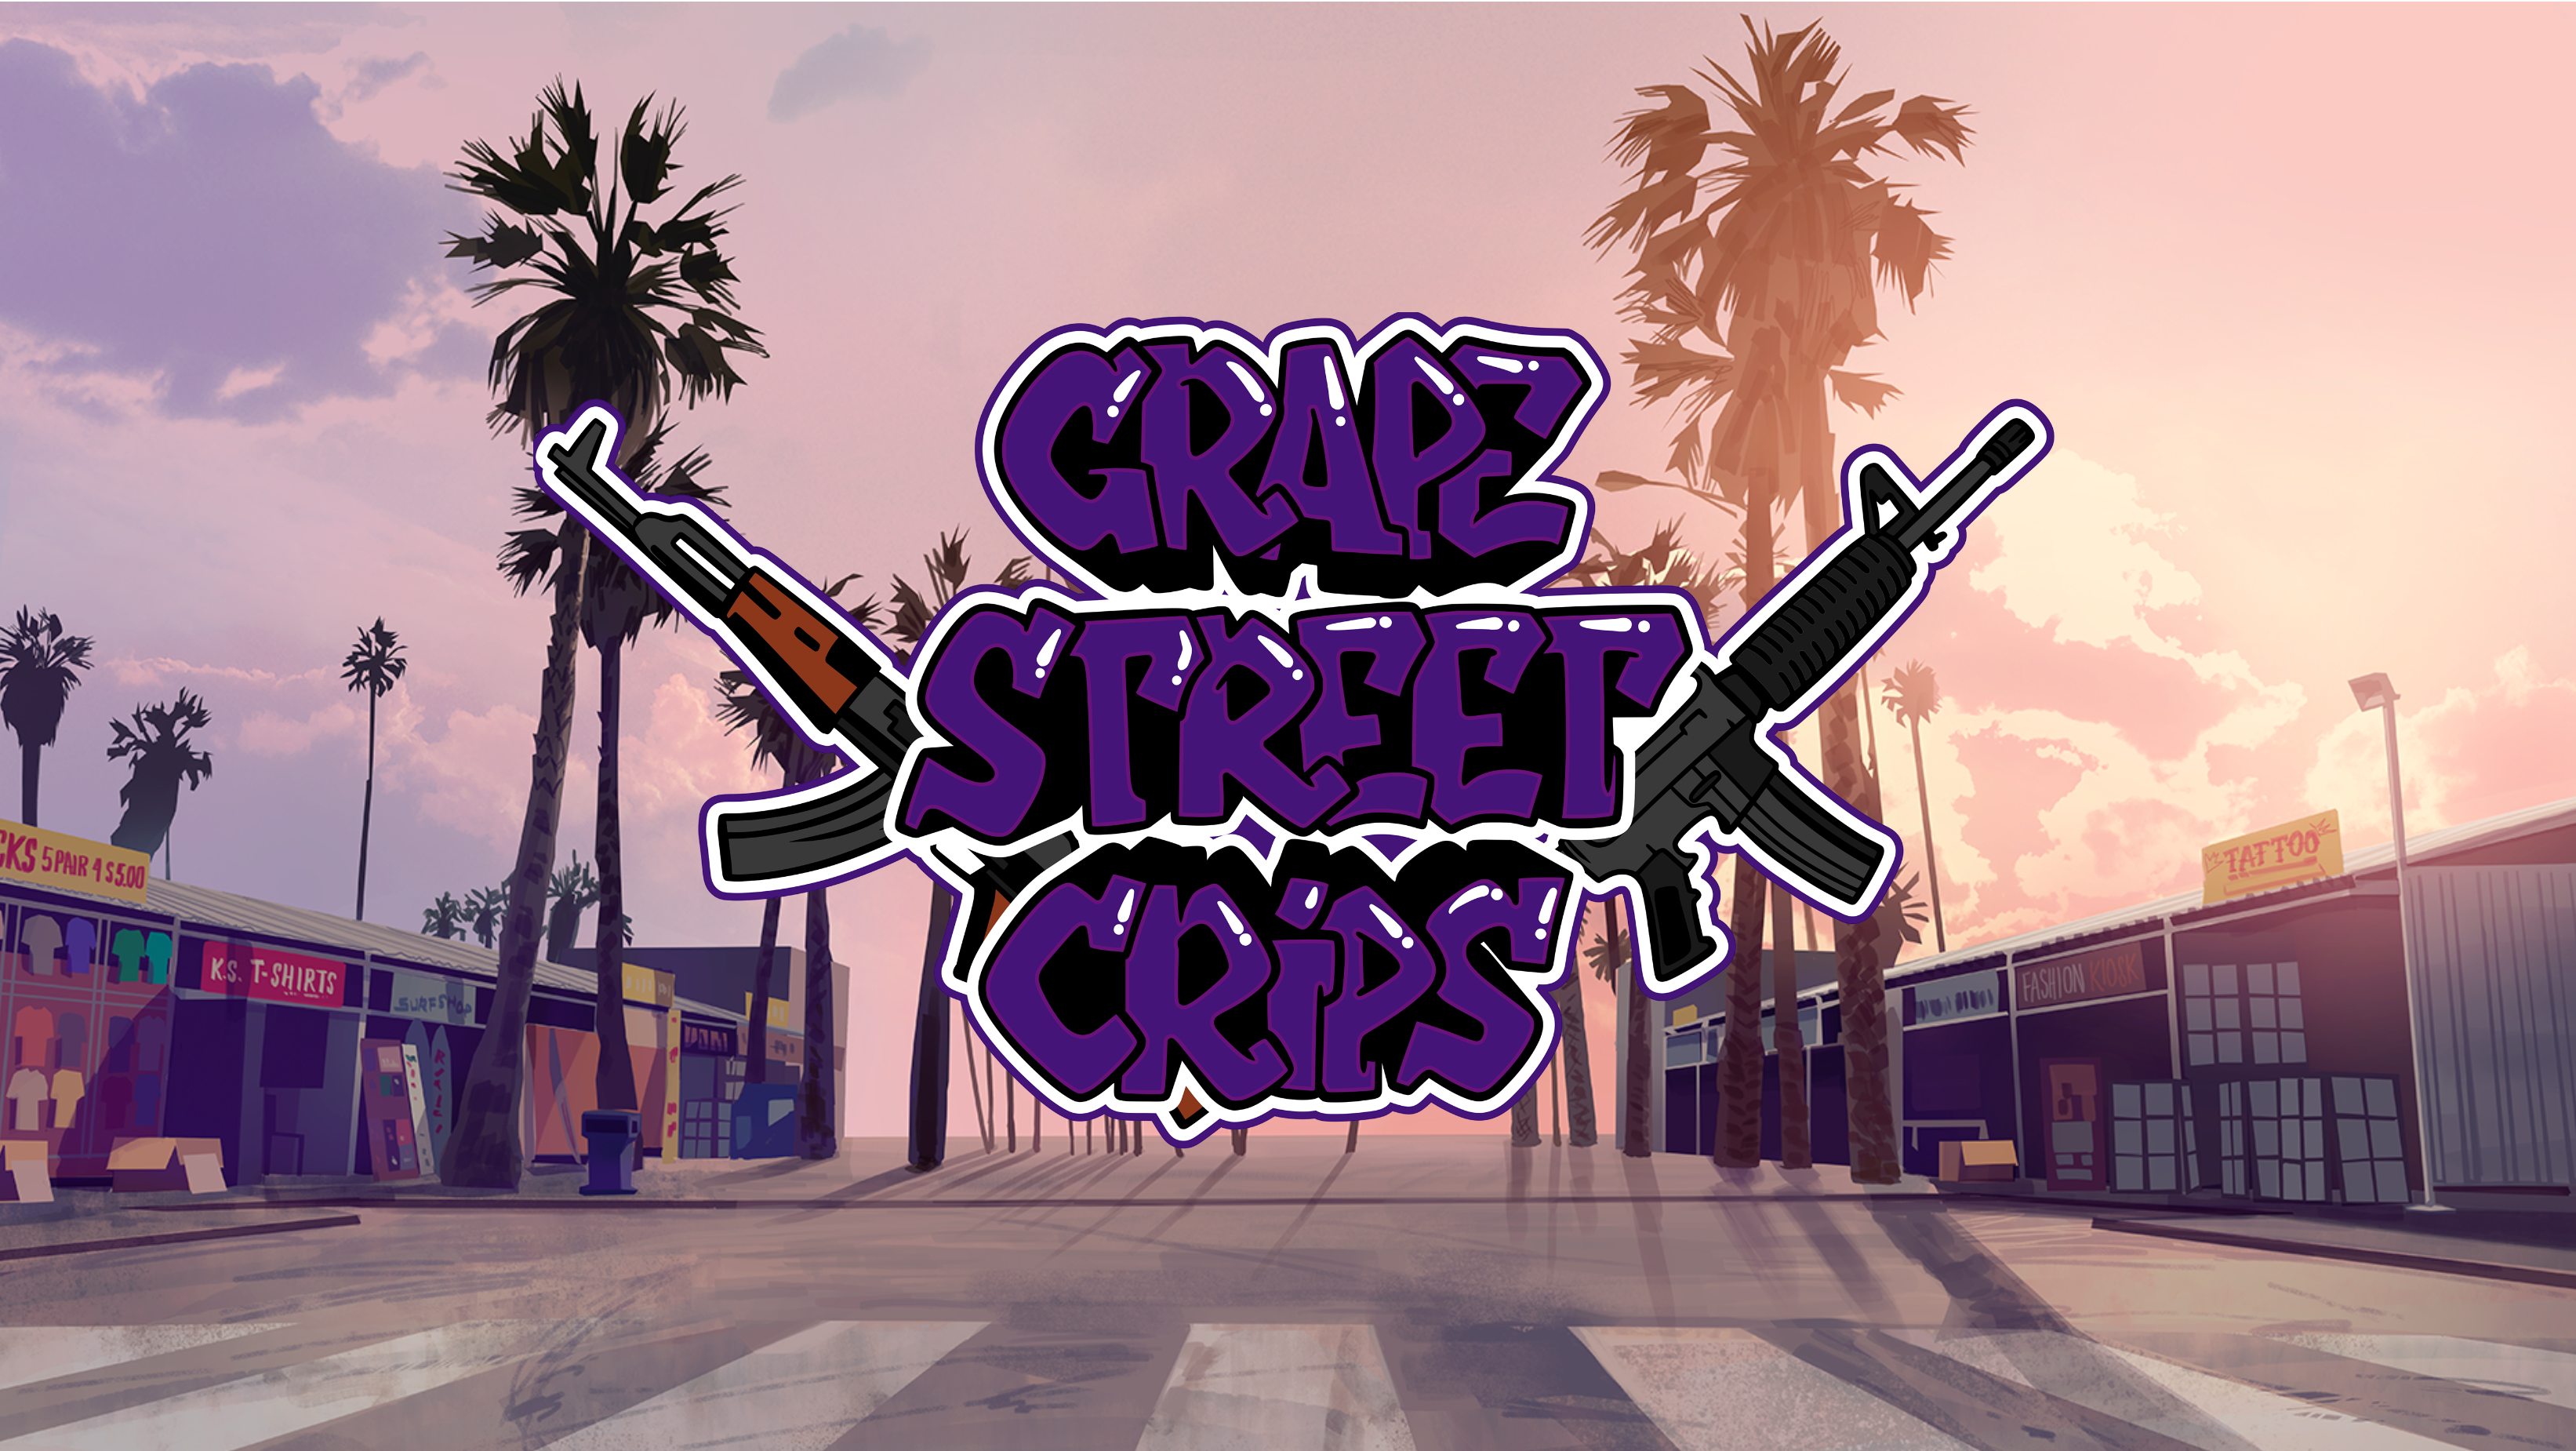 Grape Street Crips